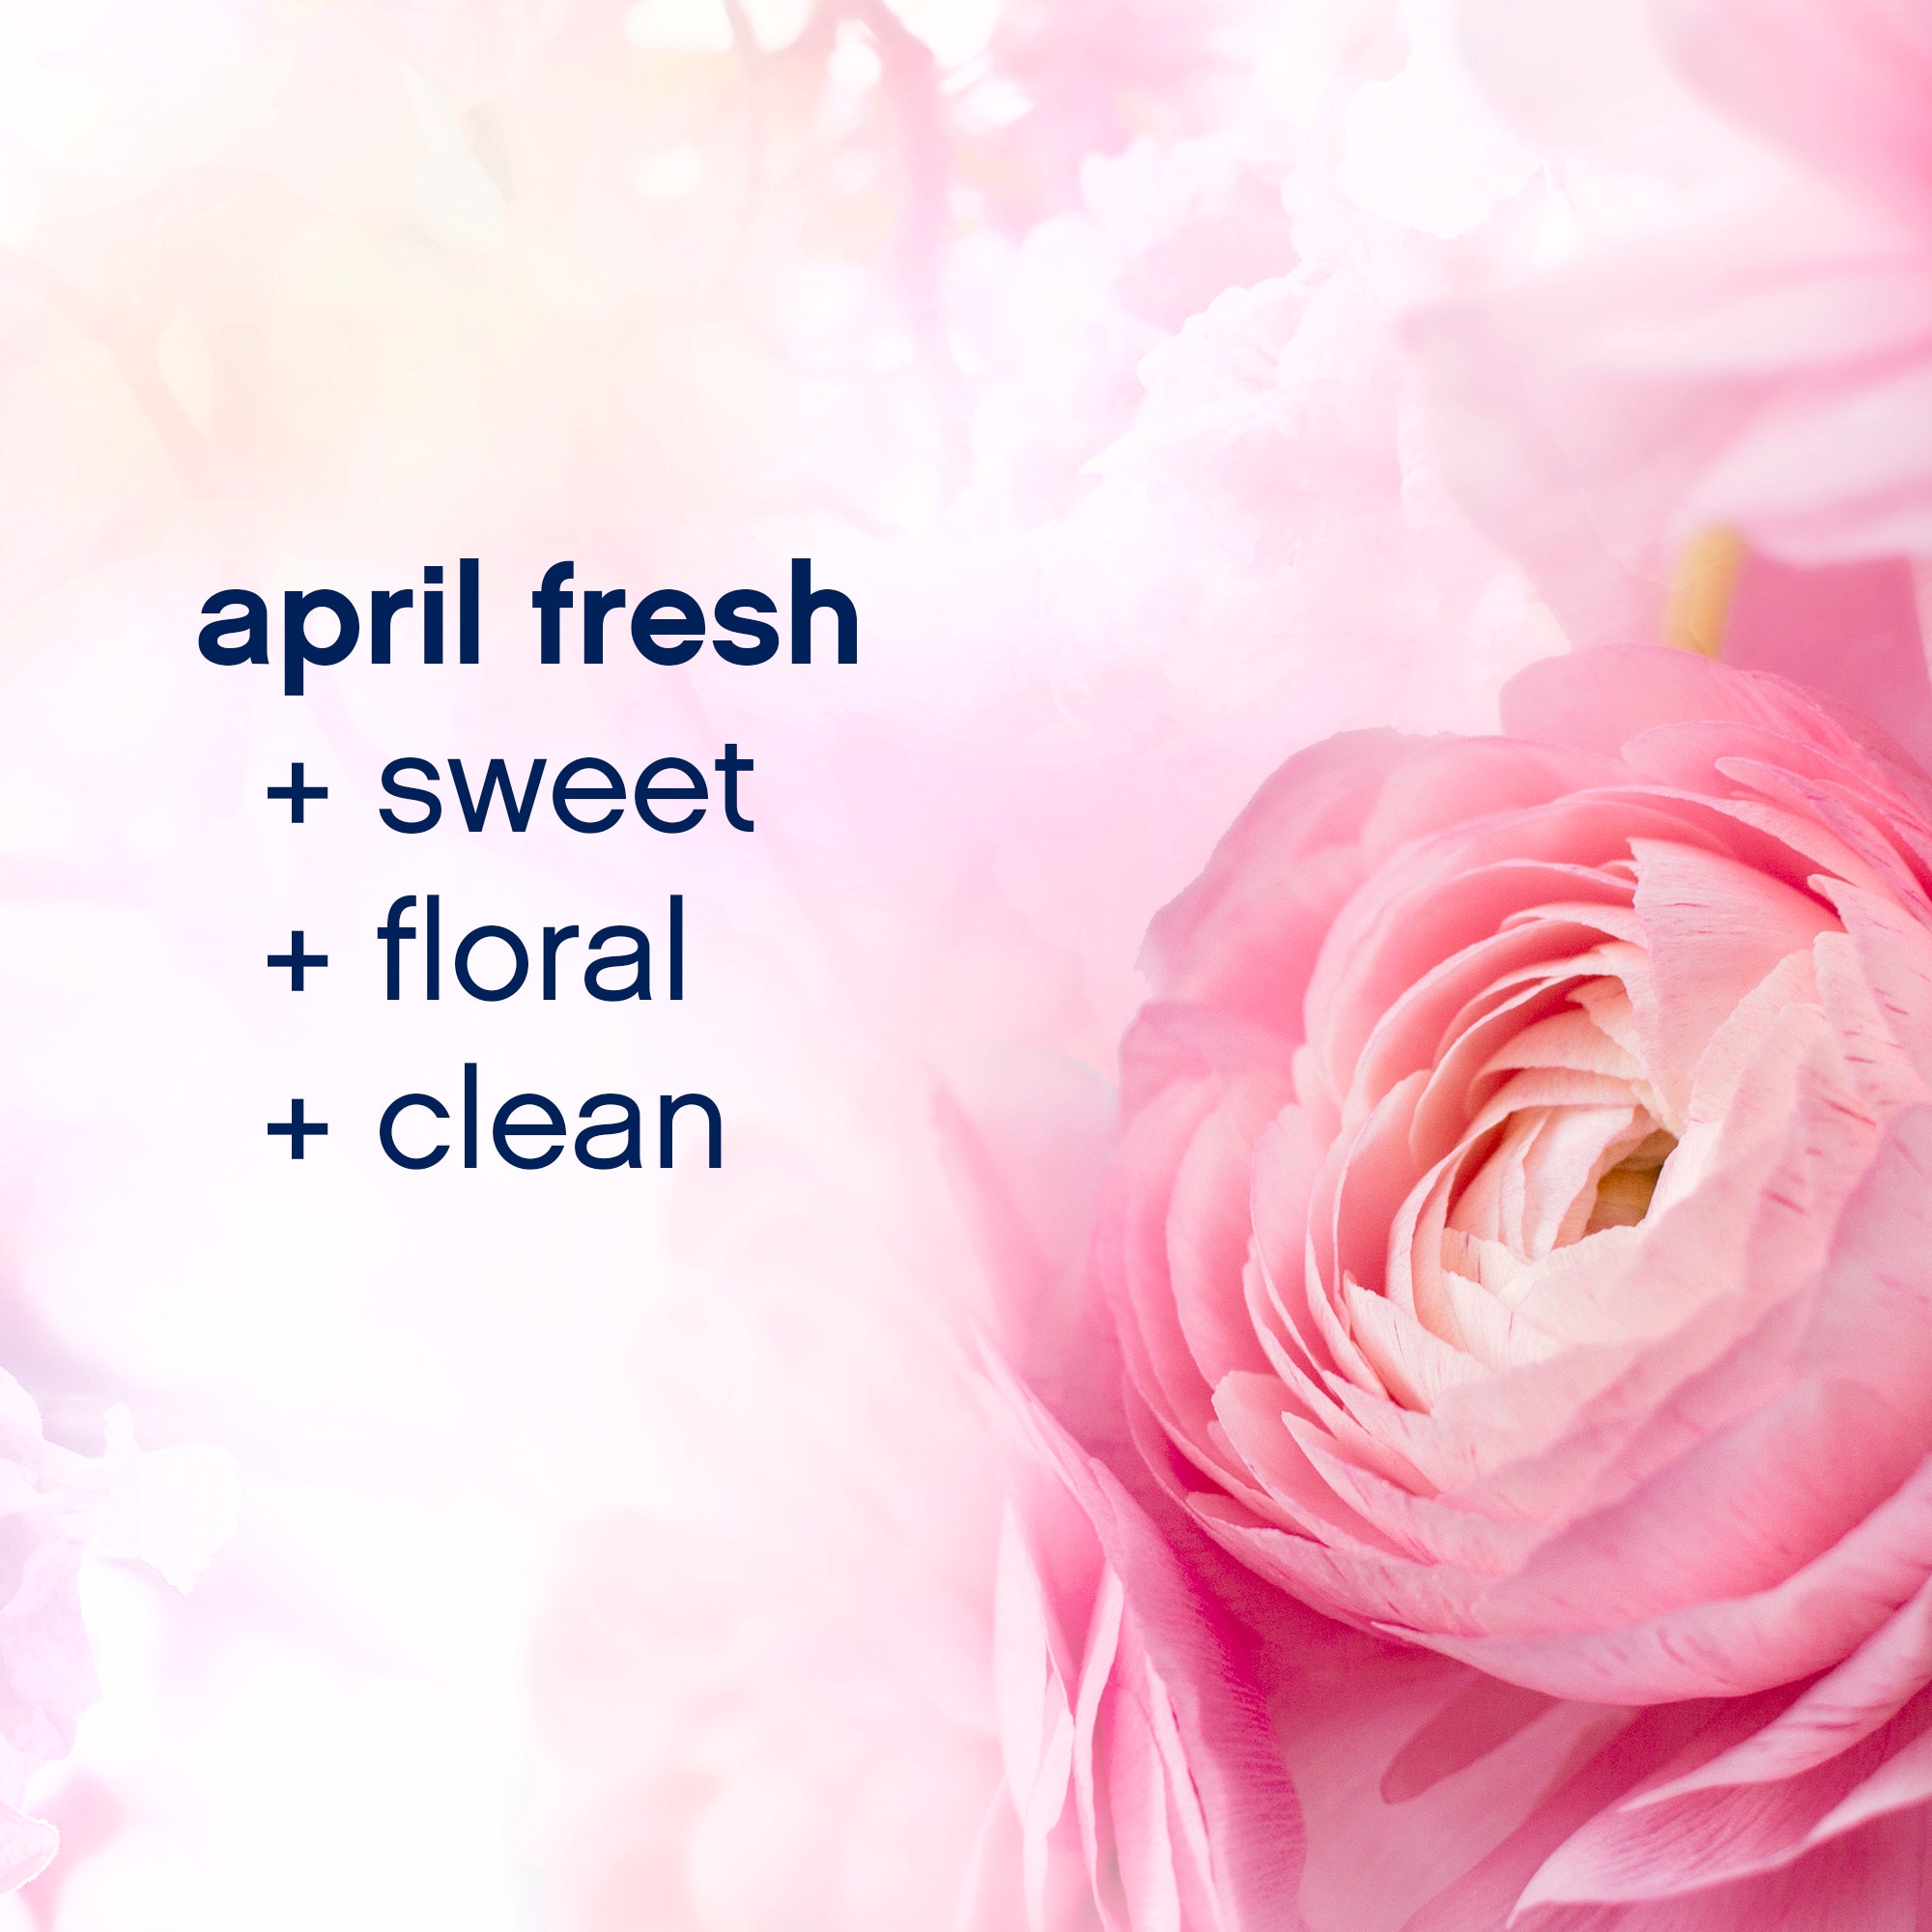 Downy Liquid Fabric Softener April Fresh